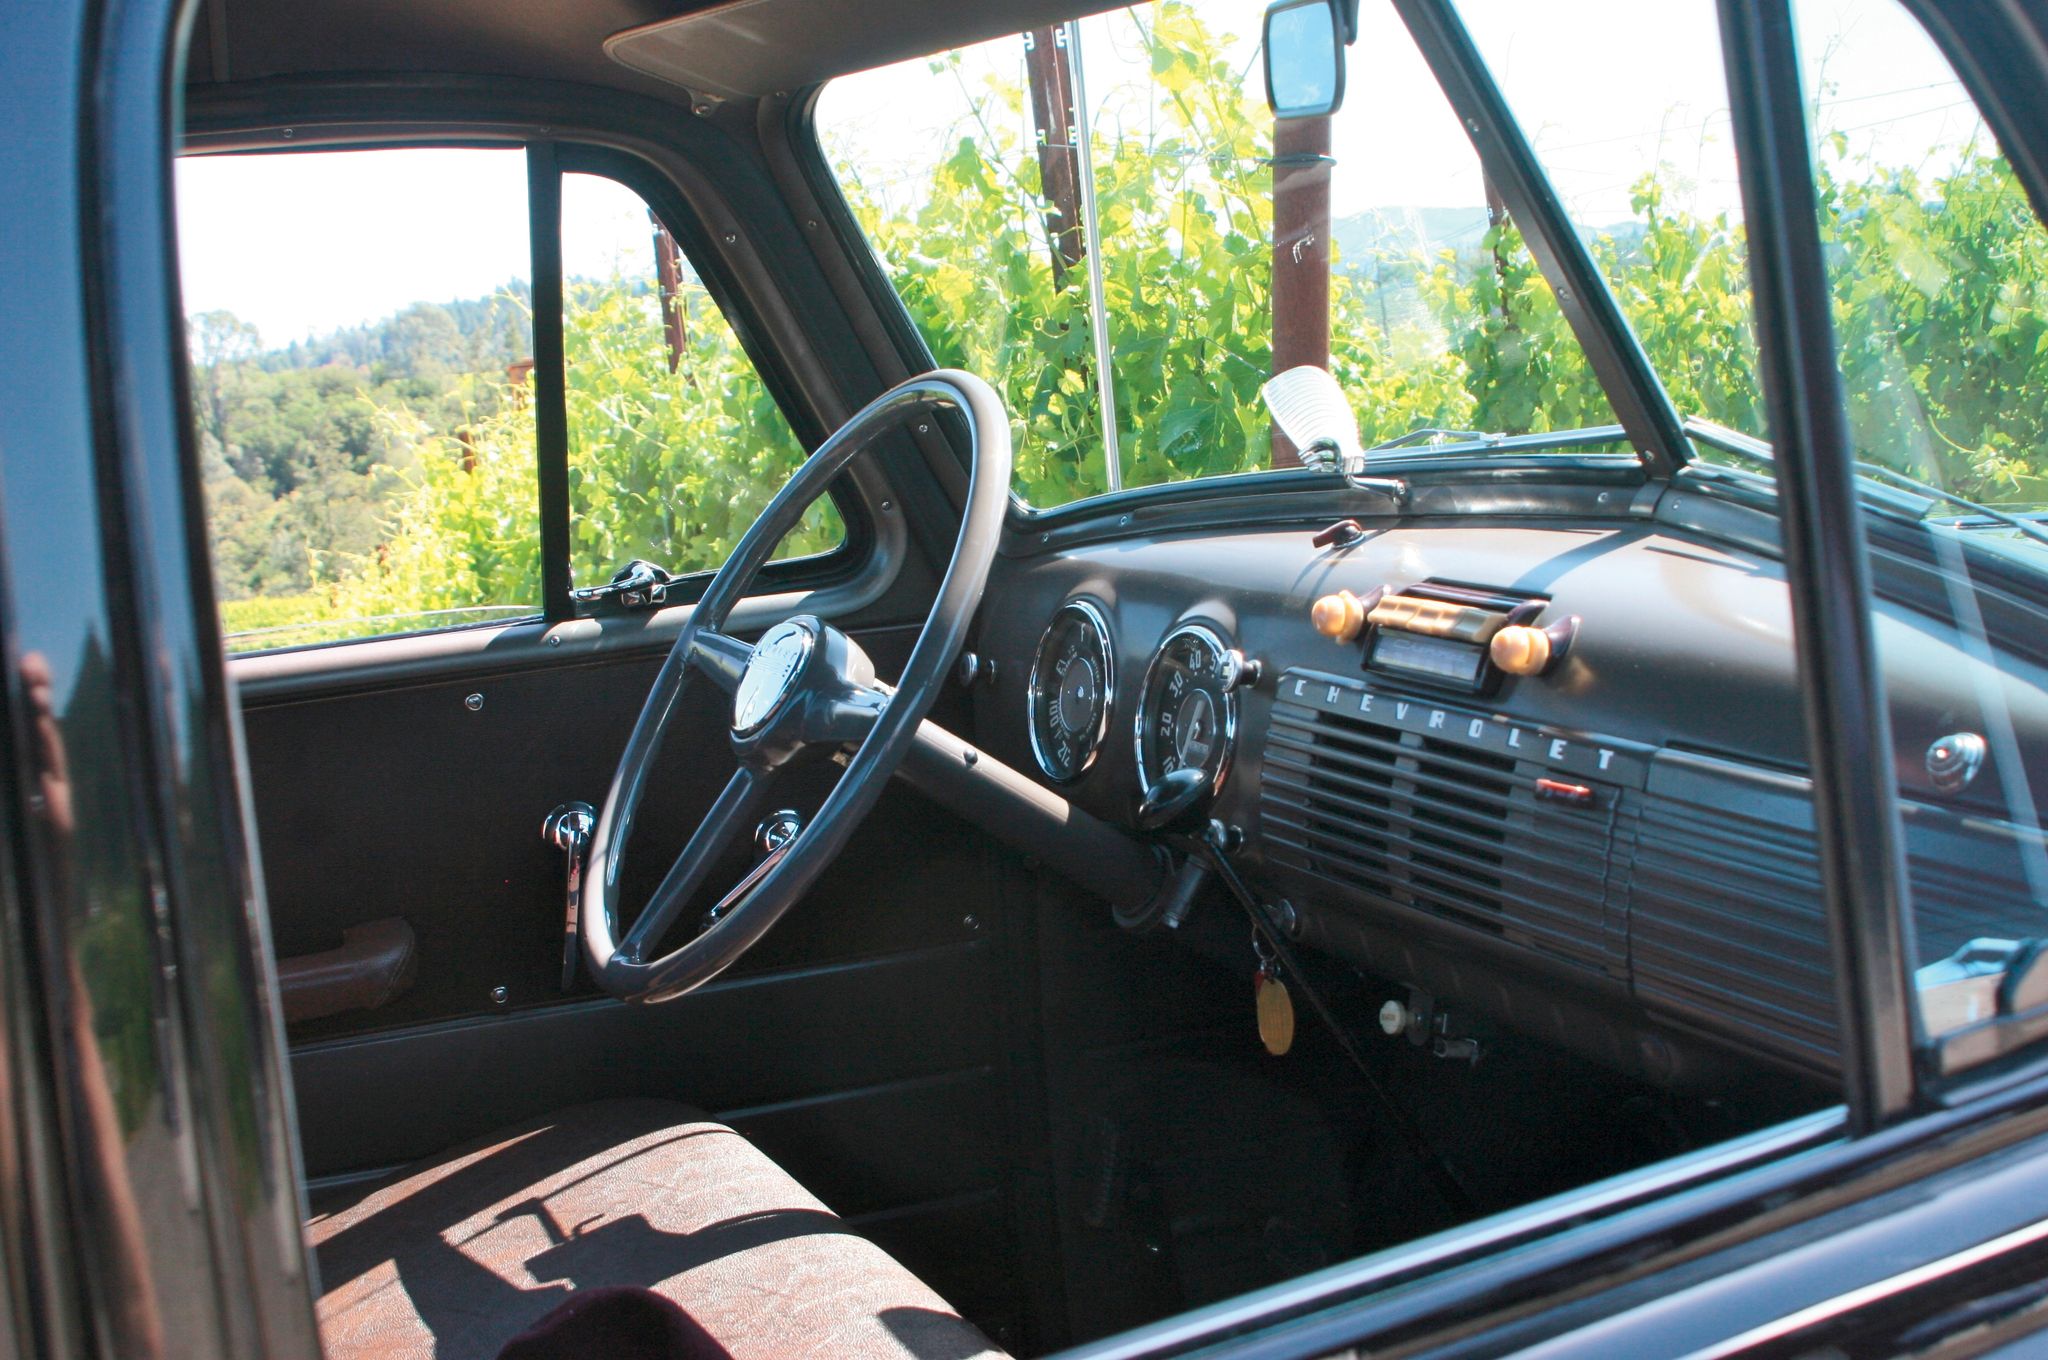 Old truck interior photo